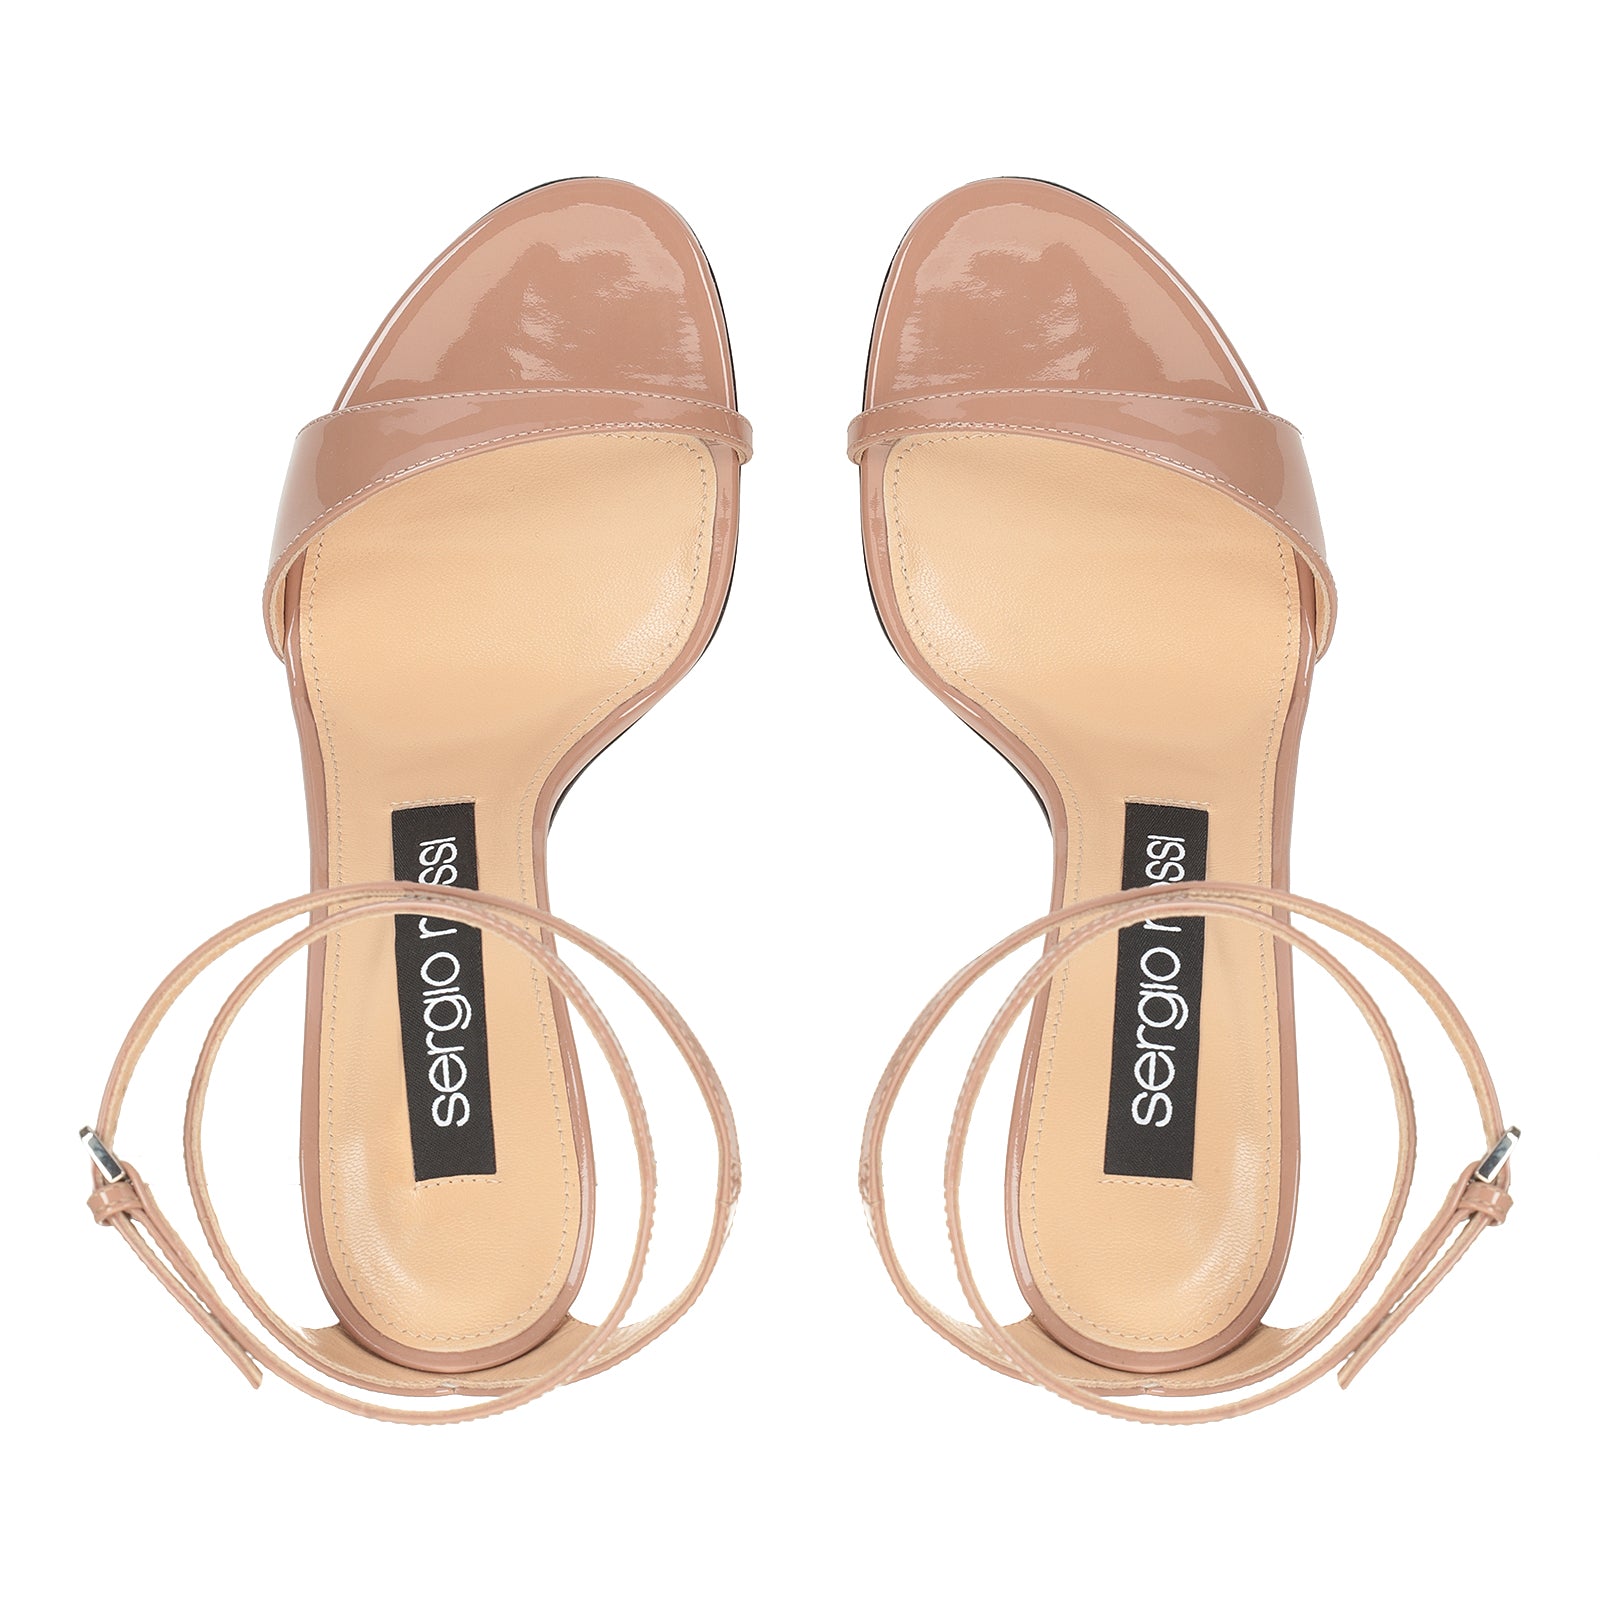 Godiva 90 Heeled Sandals - Bright Skin